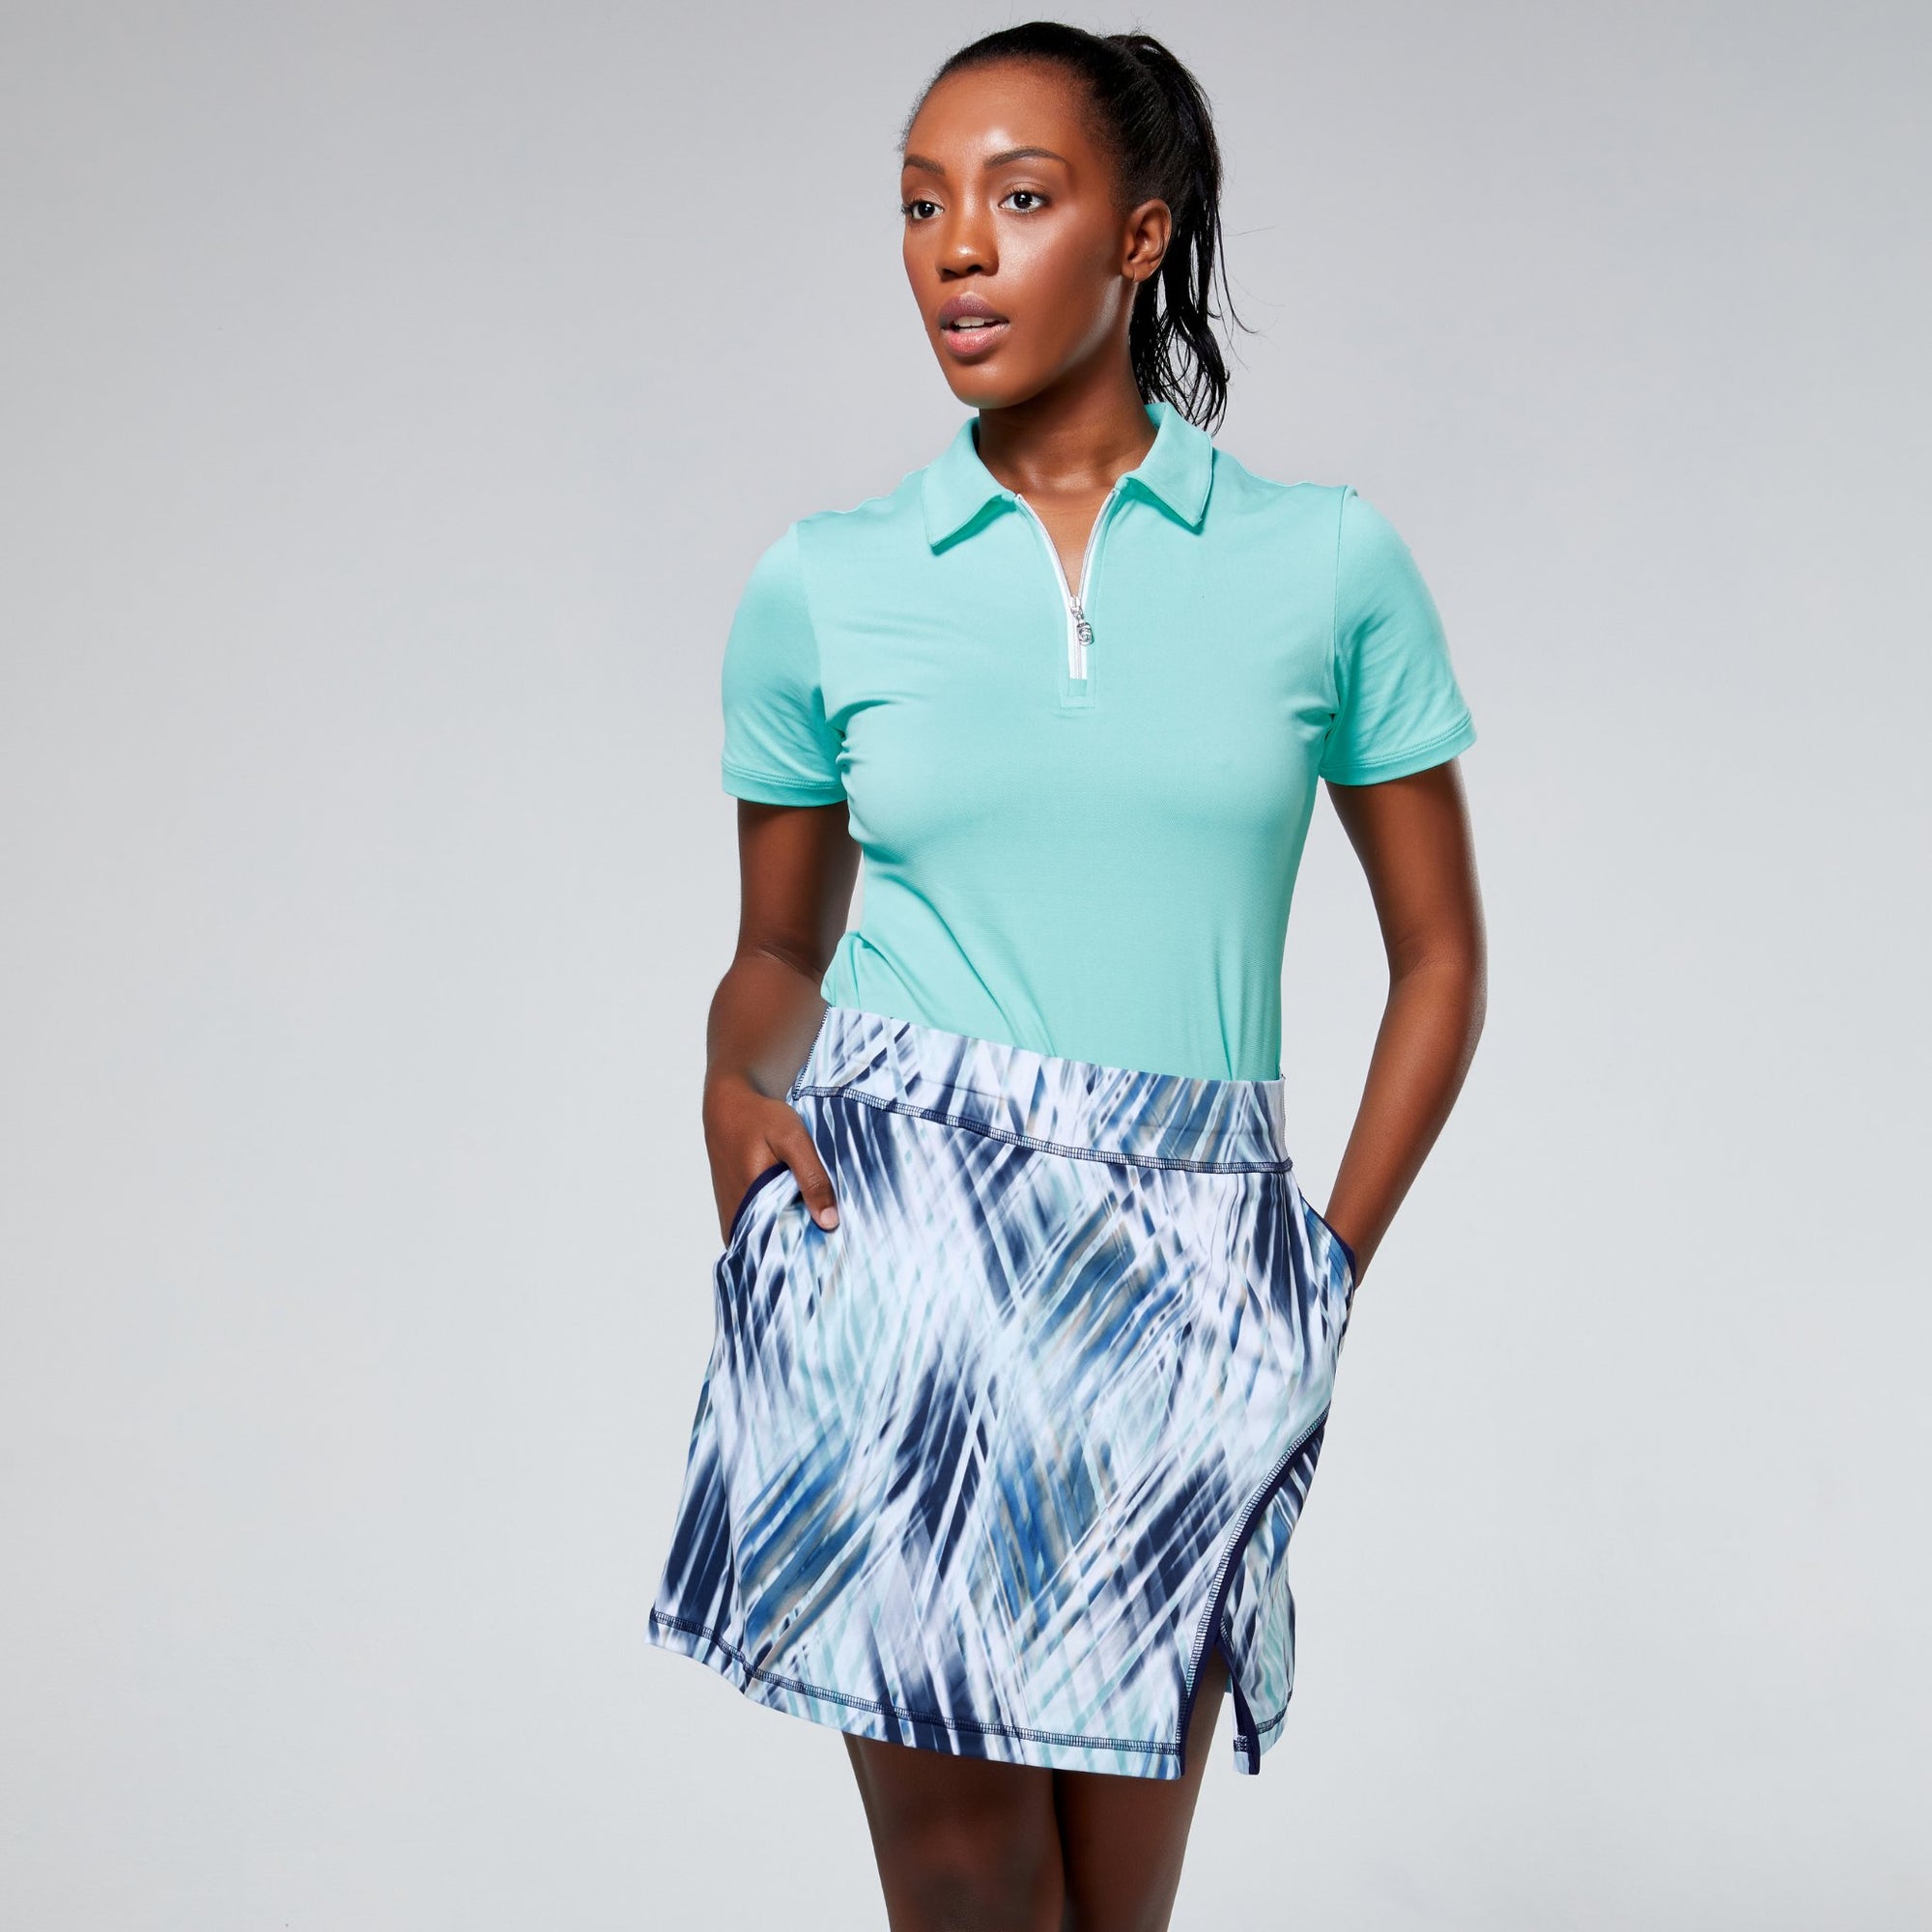 Sofibella | Fairway Fittings - Women's Golf & Athleisure Wear Boutique.